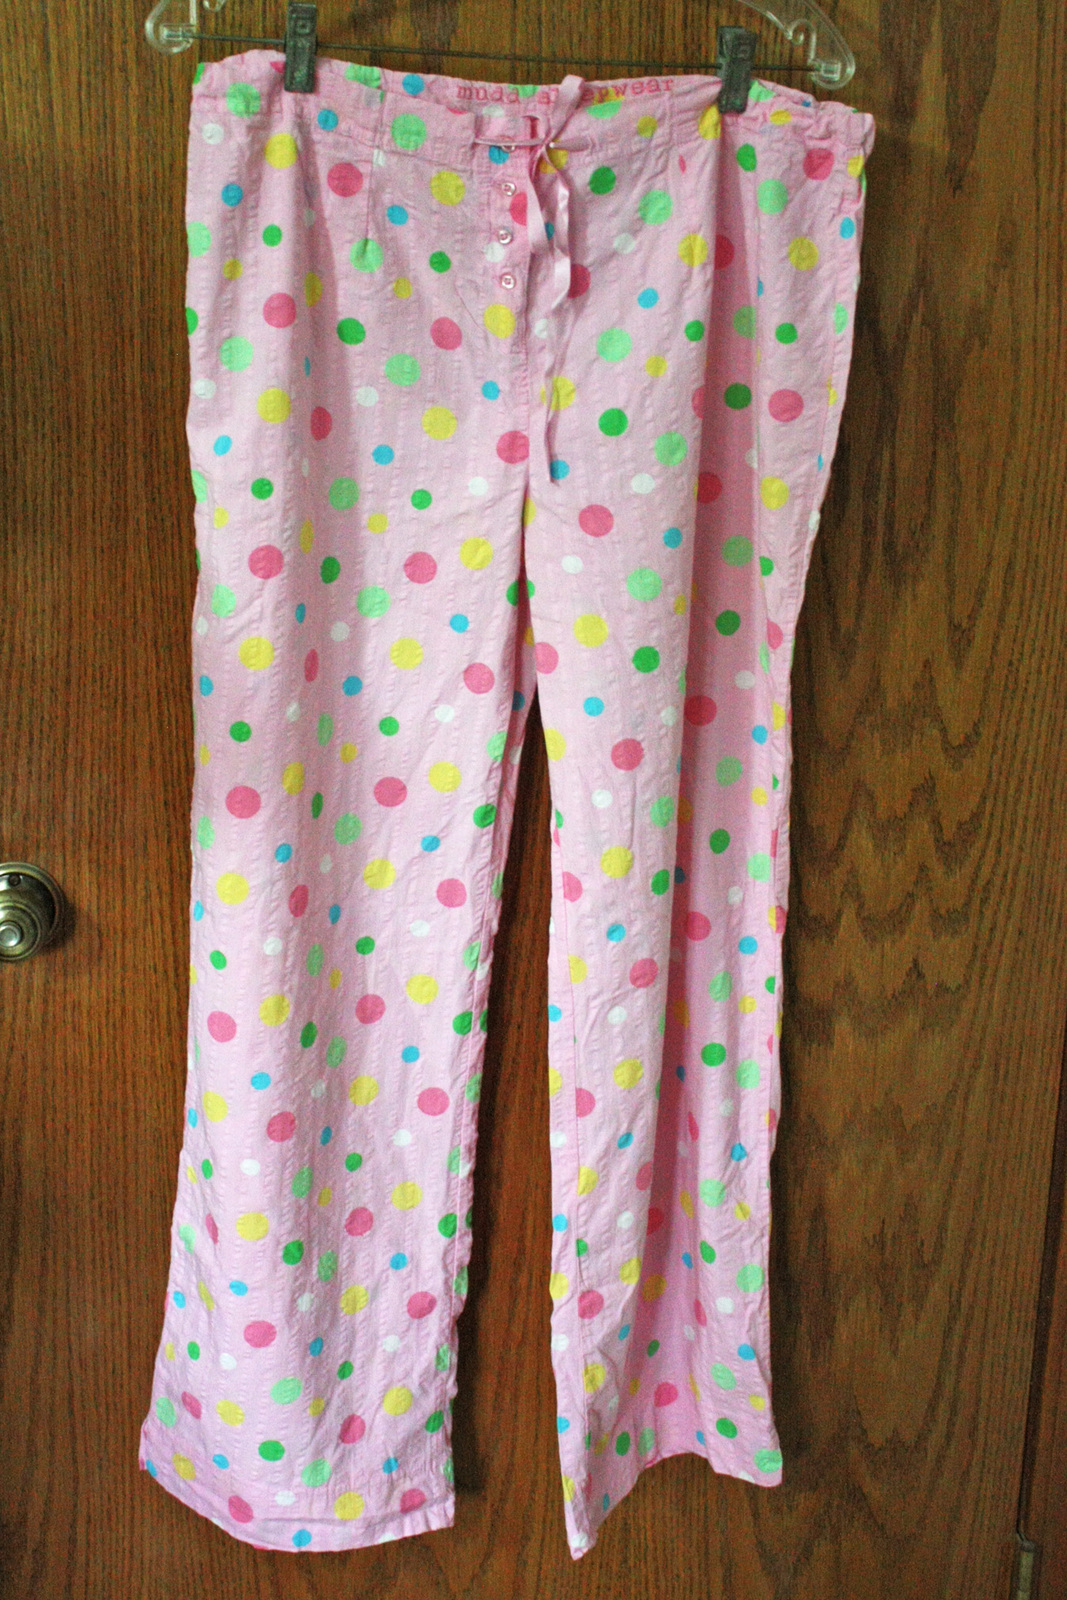 Mudd Sleepwear Pink Pants with Polka Dots Sleepwear Size XL Juniors (15) - $12.99